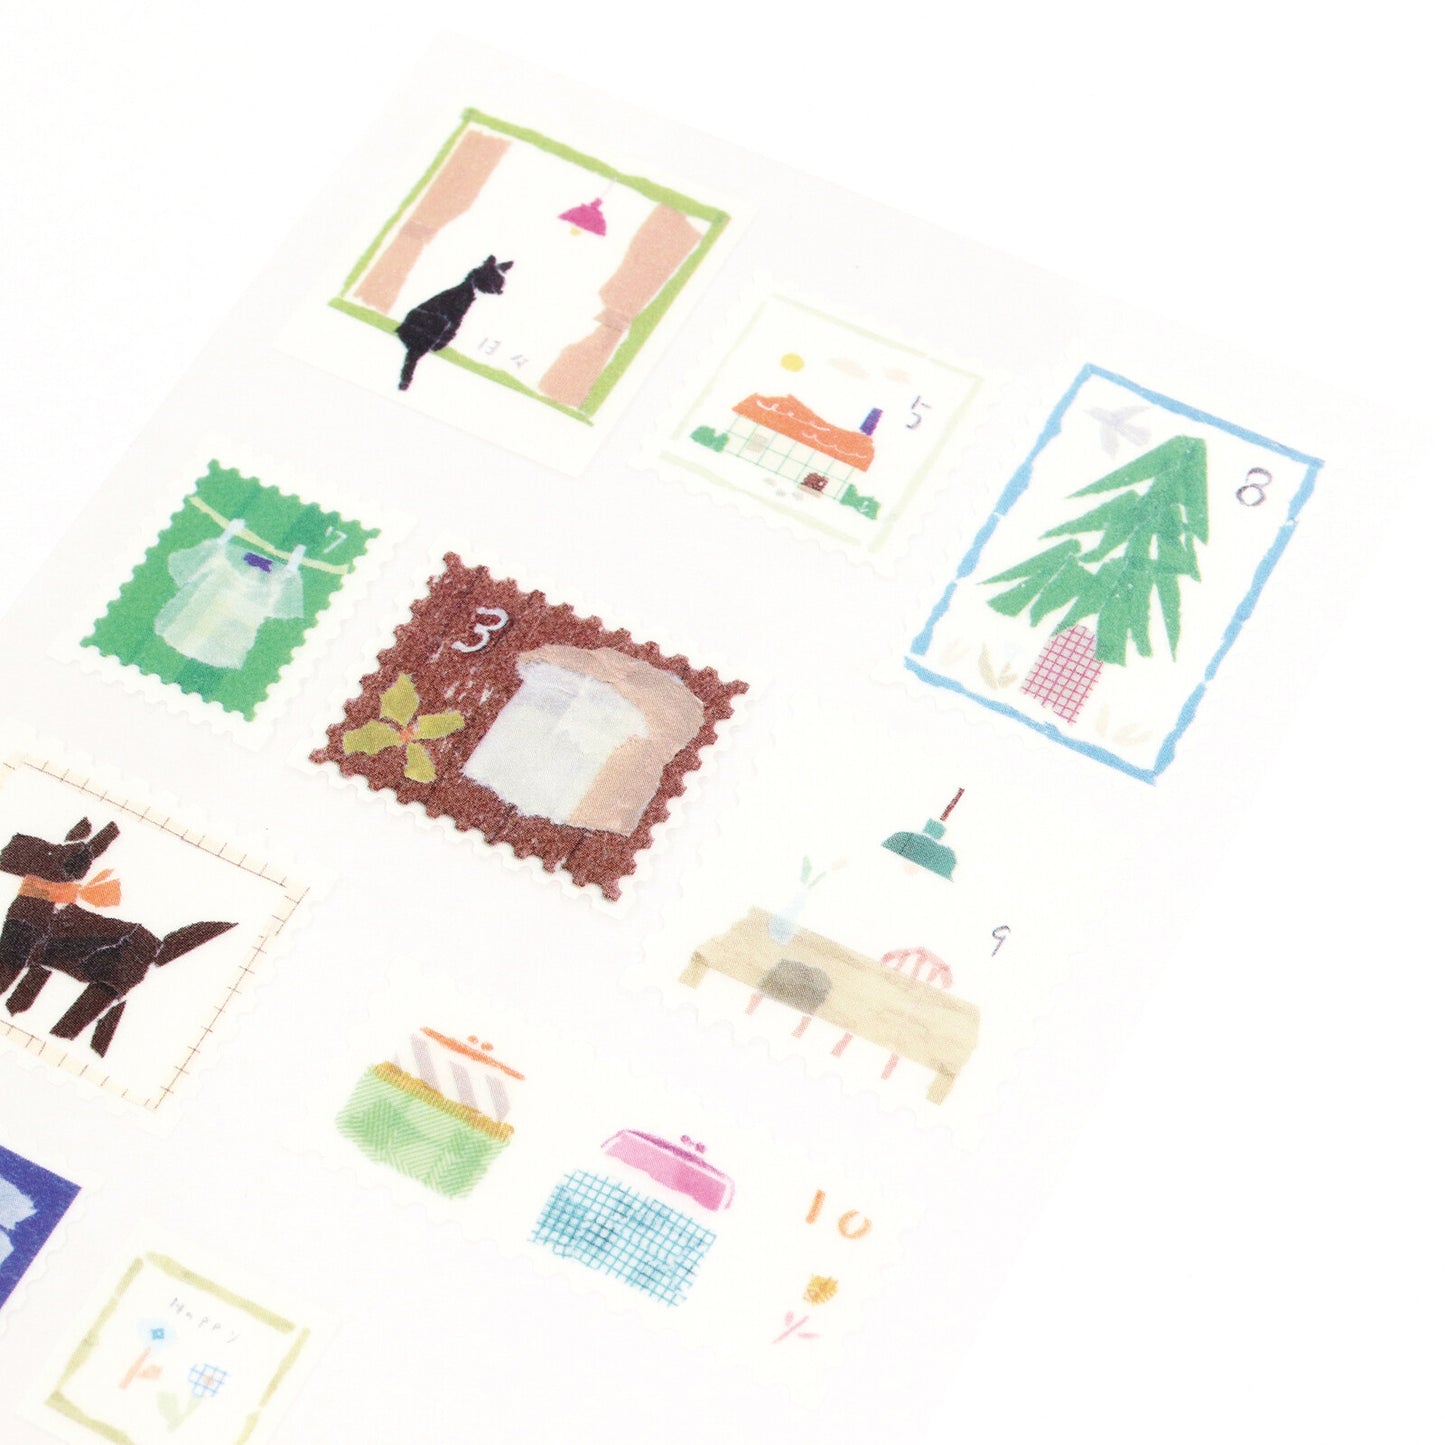 Saien x Miki Tamura Washi Art Sticker Sheet - Stamp, 1 PC